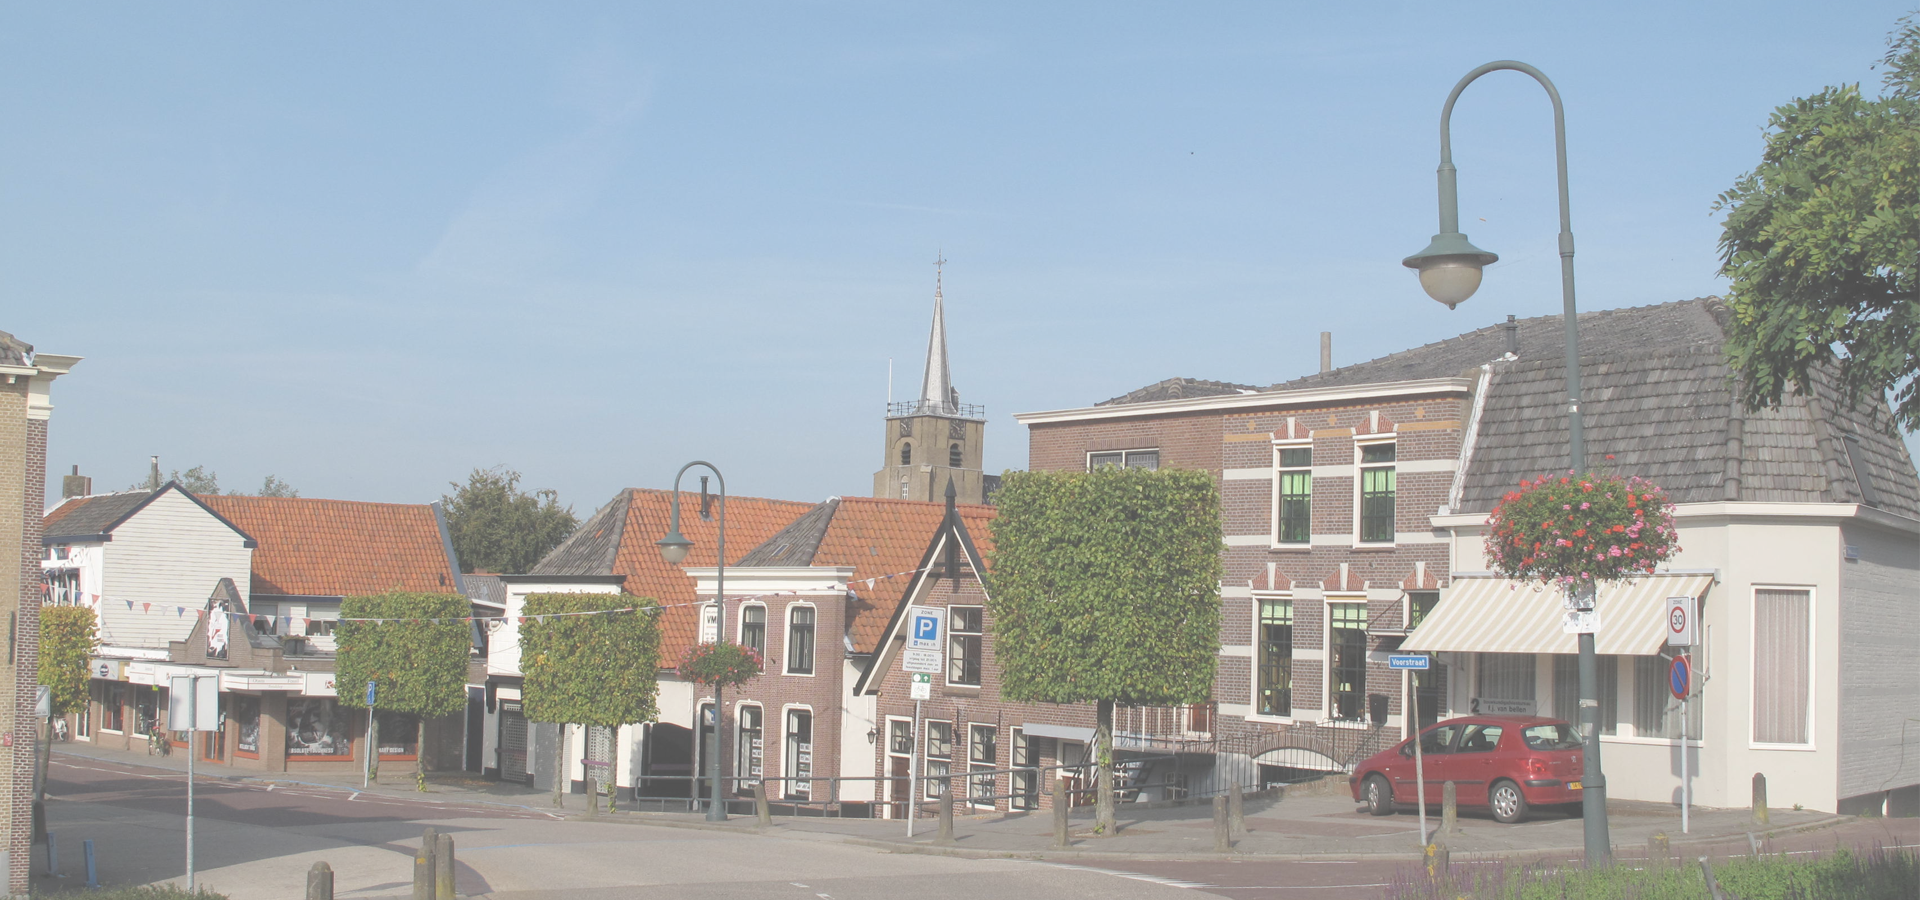 <b>Numansdorp, South Holland, Netherlands</b>